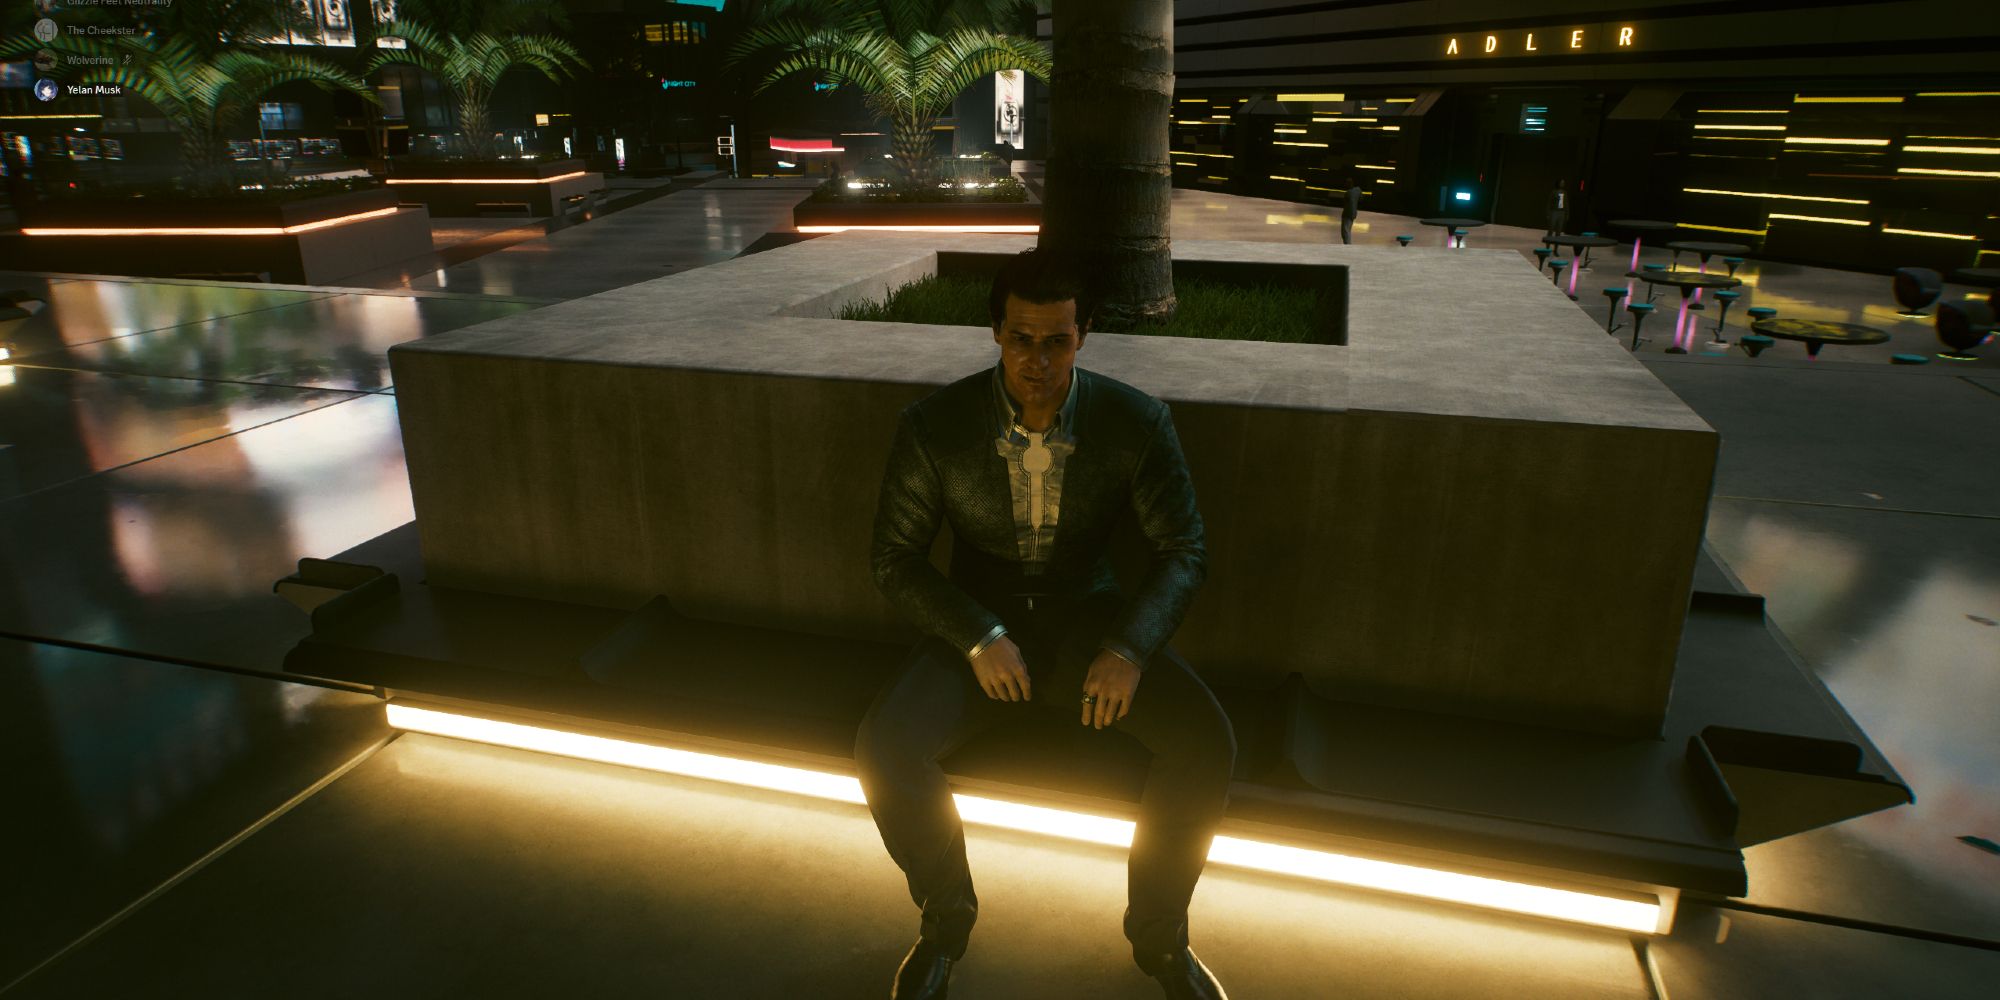 Jefferson Peralez sitting on a bench in Cyberpunk 2077.